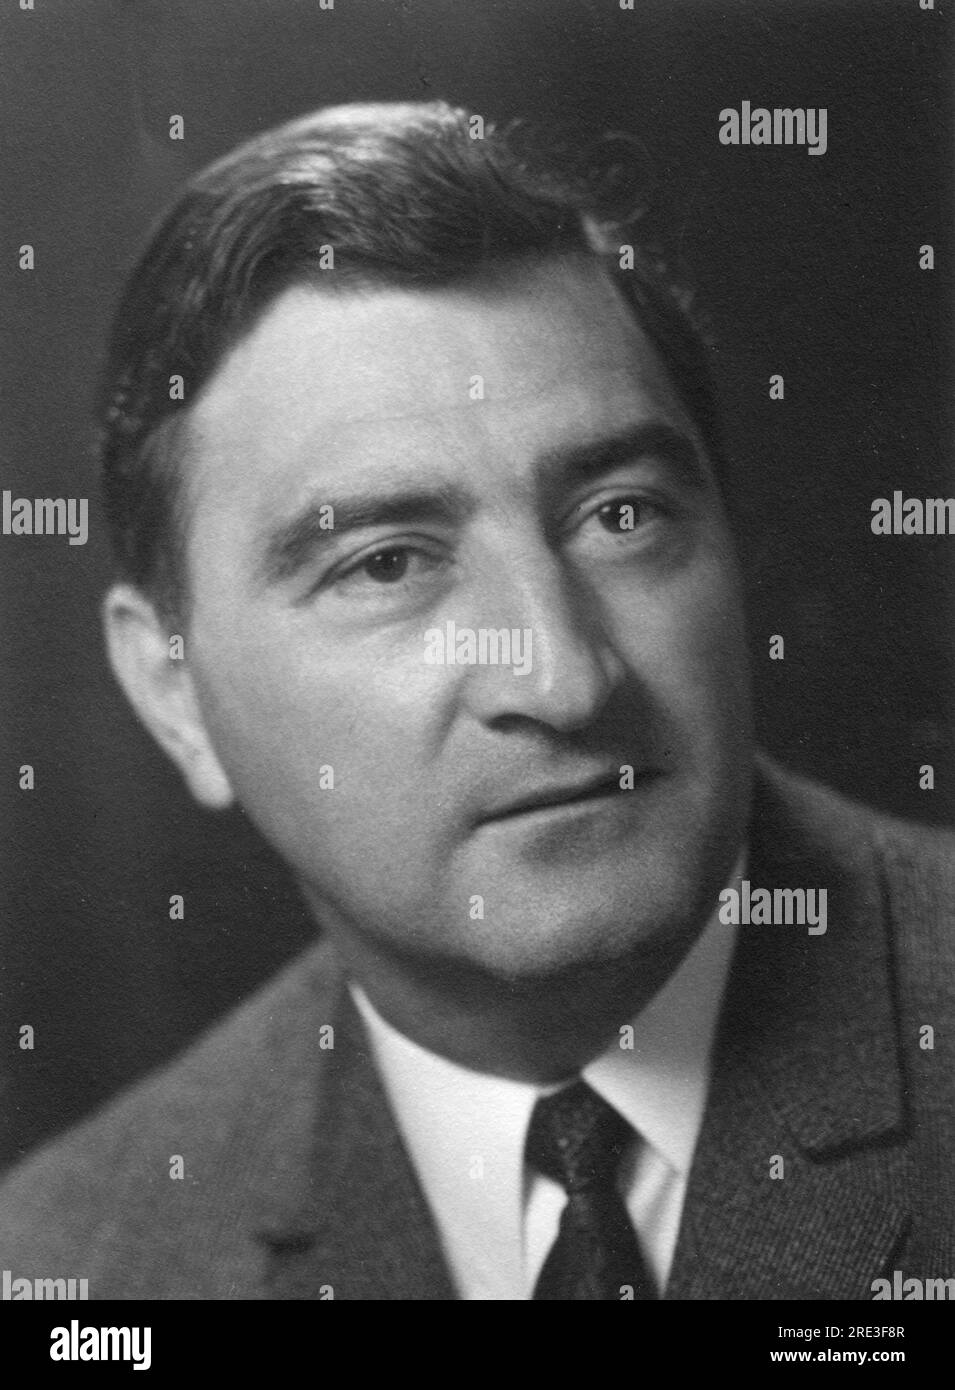 Wicklmayr, Rainer, 12.1.1929 - 14,8.2020, político alemán (CDU), ministro de Trabajo de Saarland, ADDITIONAL-RIGHTS-CLEARANCE-INFO-NOT-AVAILABLE Foto de stock